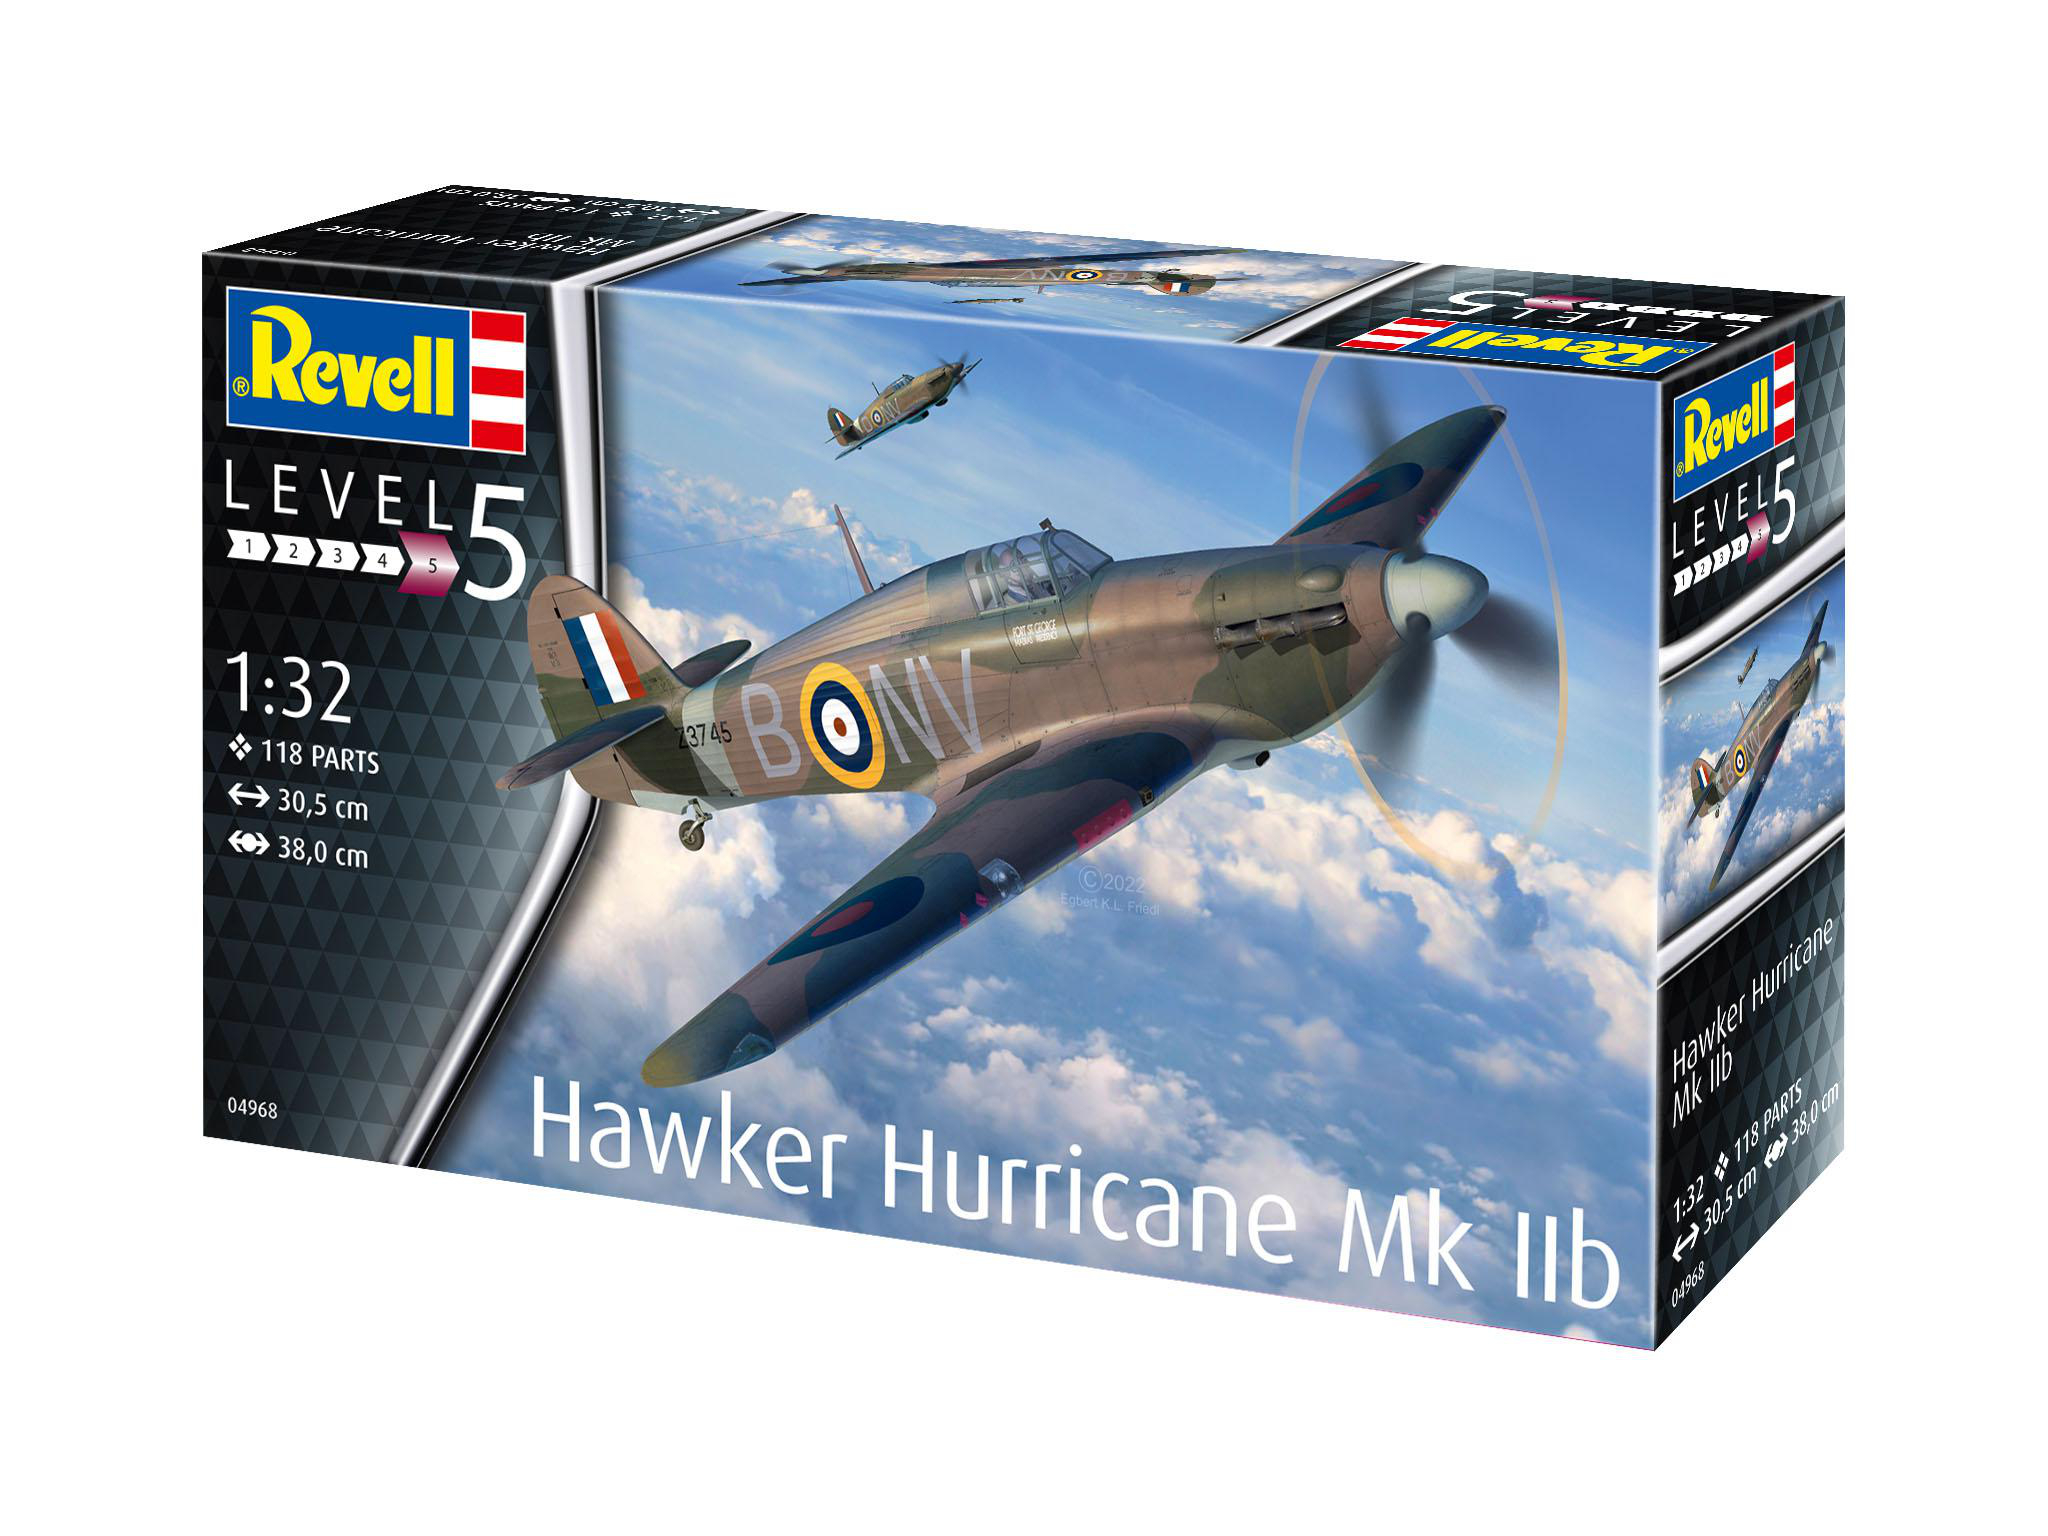 Hawker Mehrfarbig Modellbausatz, 04968 Hurricane REVELL IIb Mk